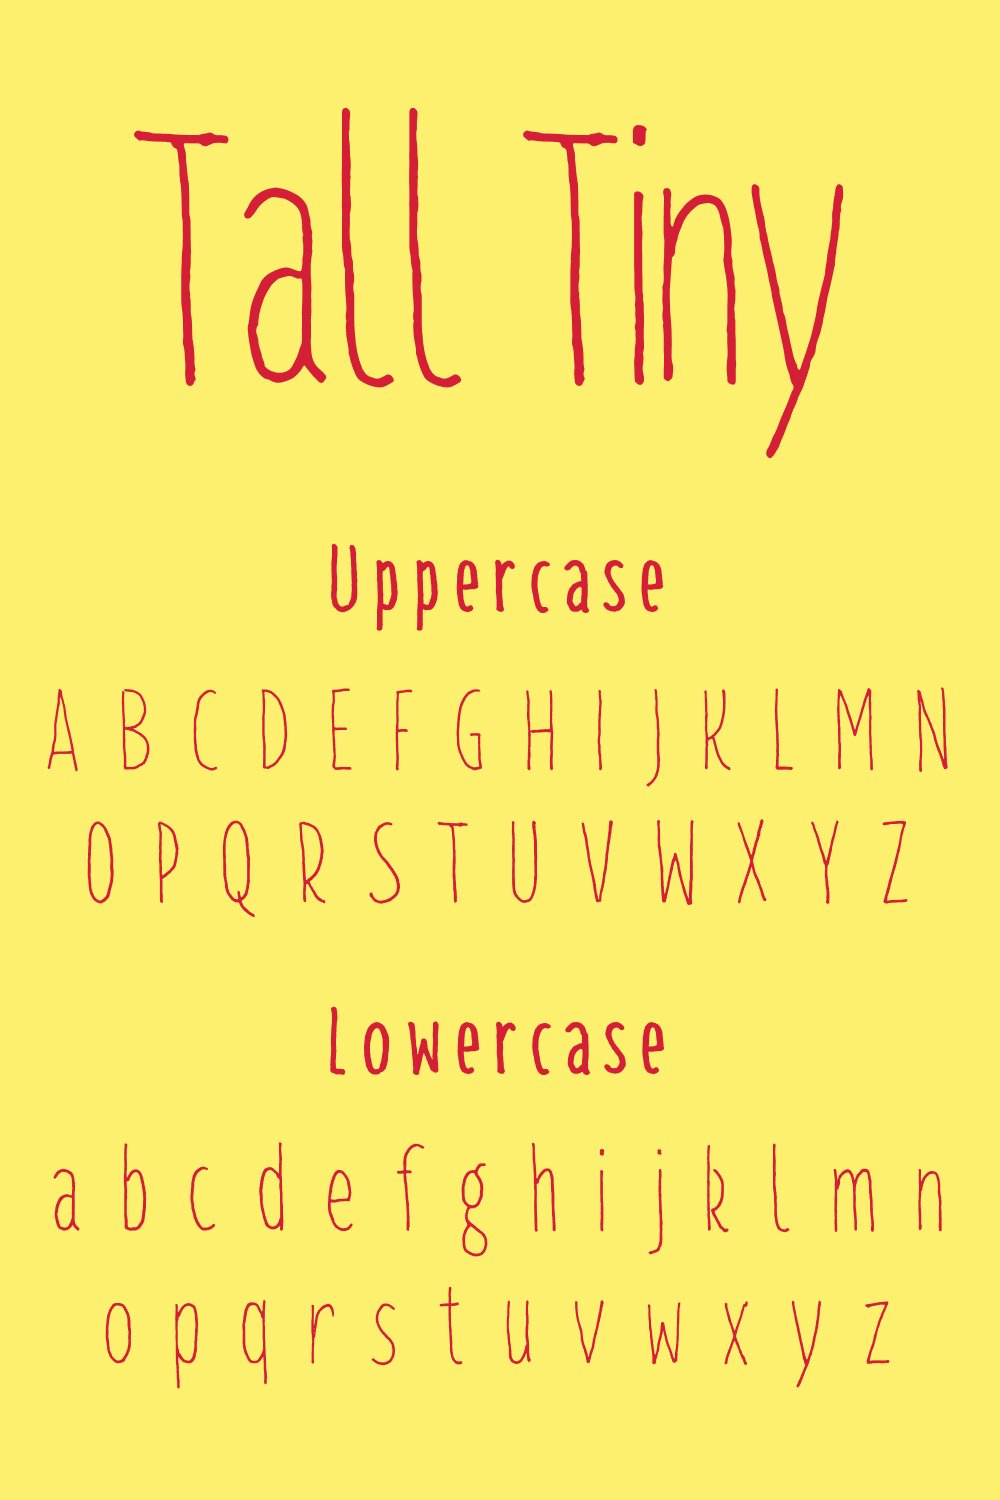 Free tall tiny font - Pinterest.